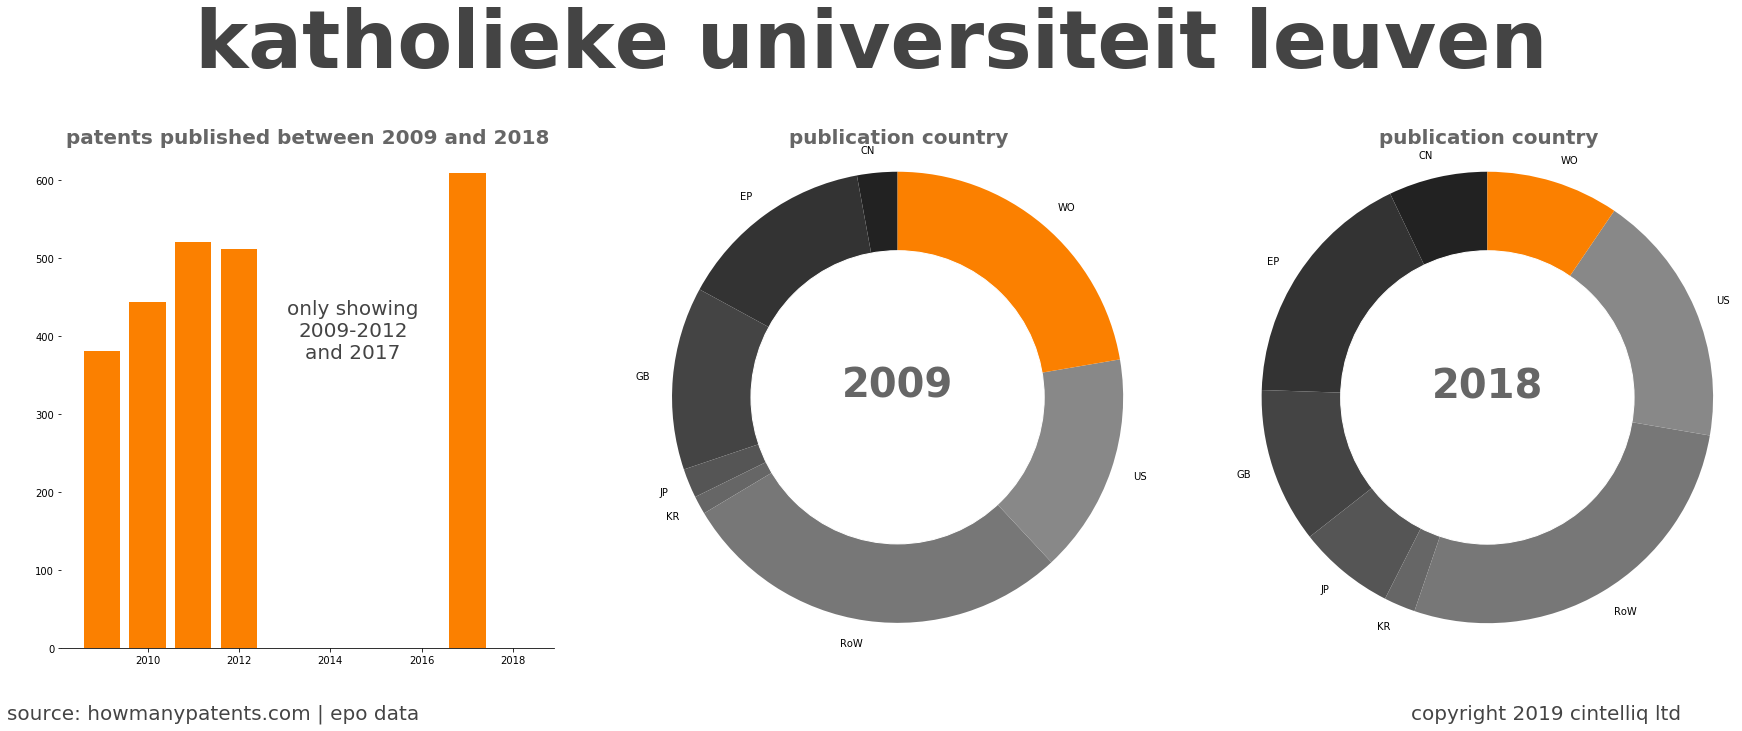 summary of patents for Katholieke Universiteit Leuven